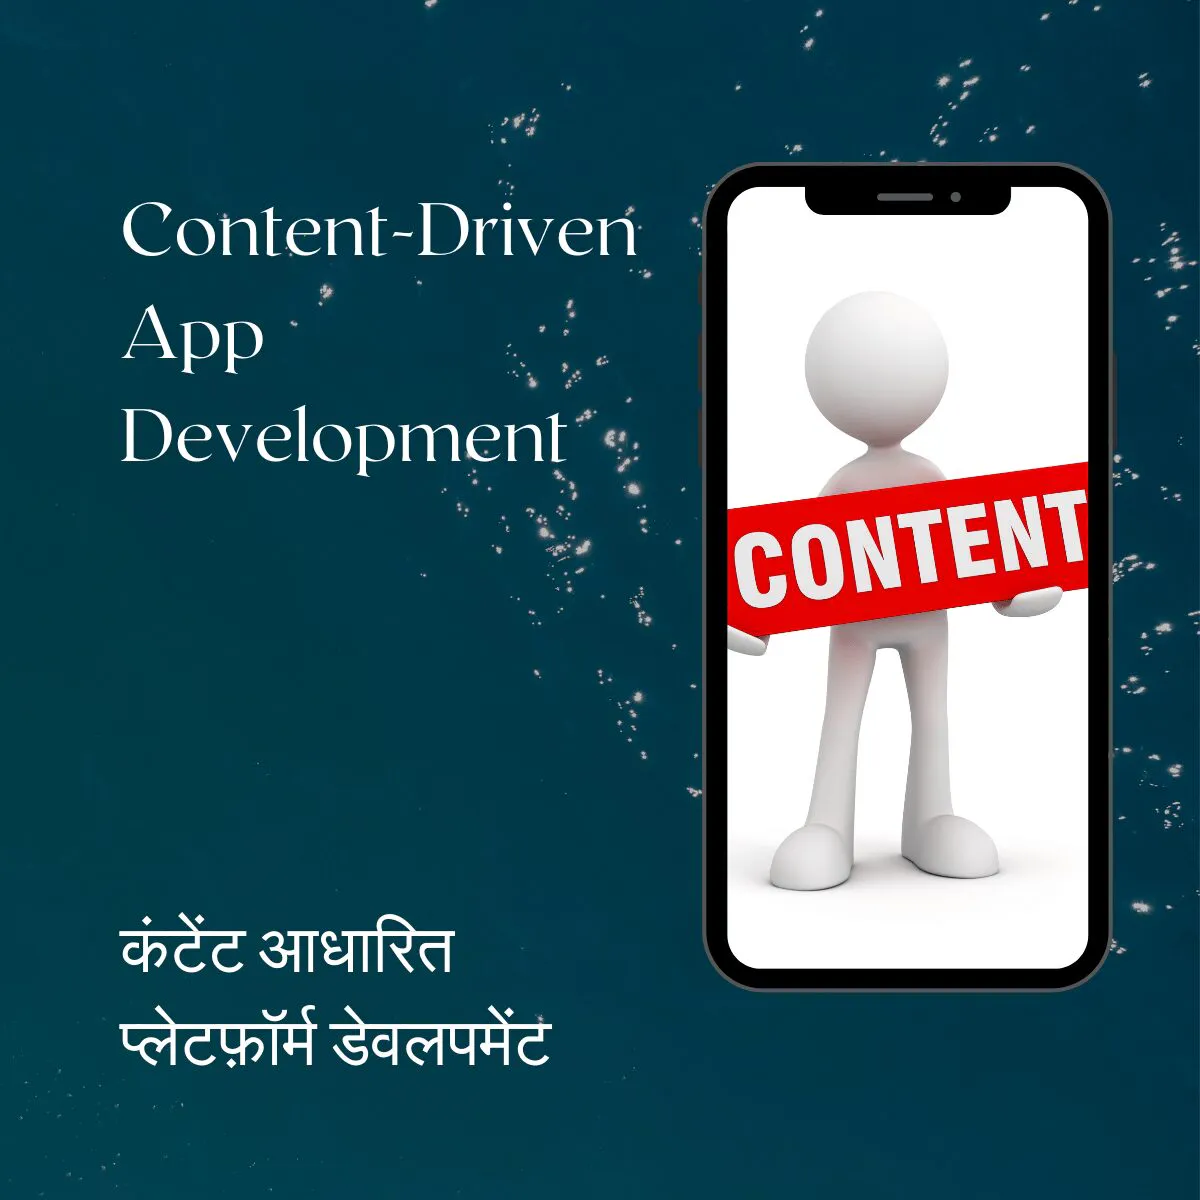 Content-Driven App Development